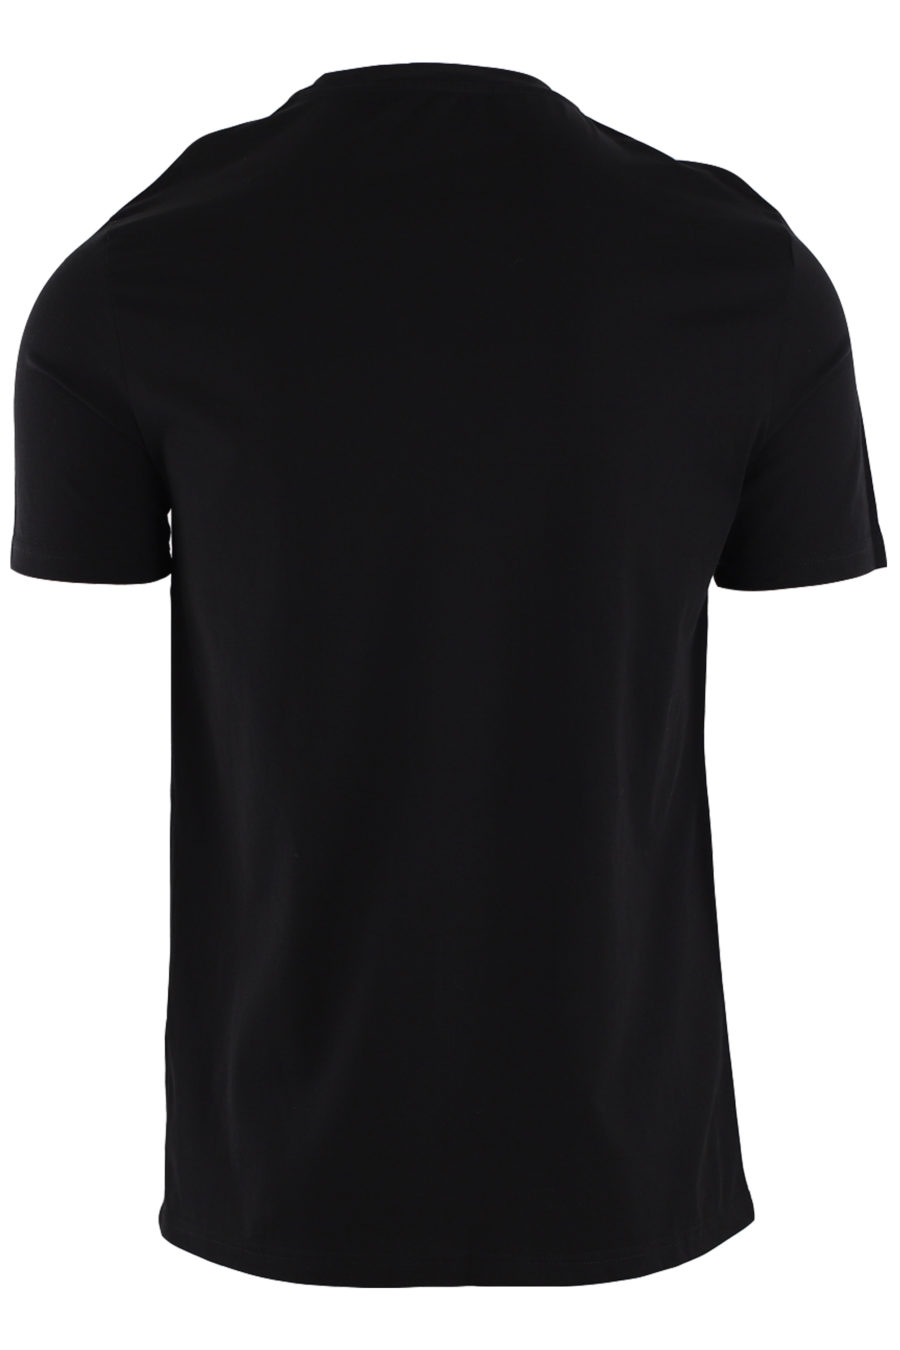 Camiseta interior negra con logo blanco - IMG 8798